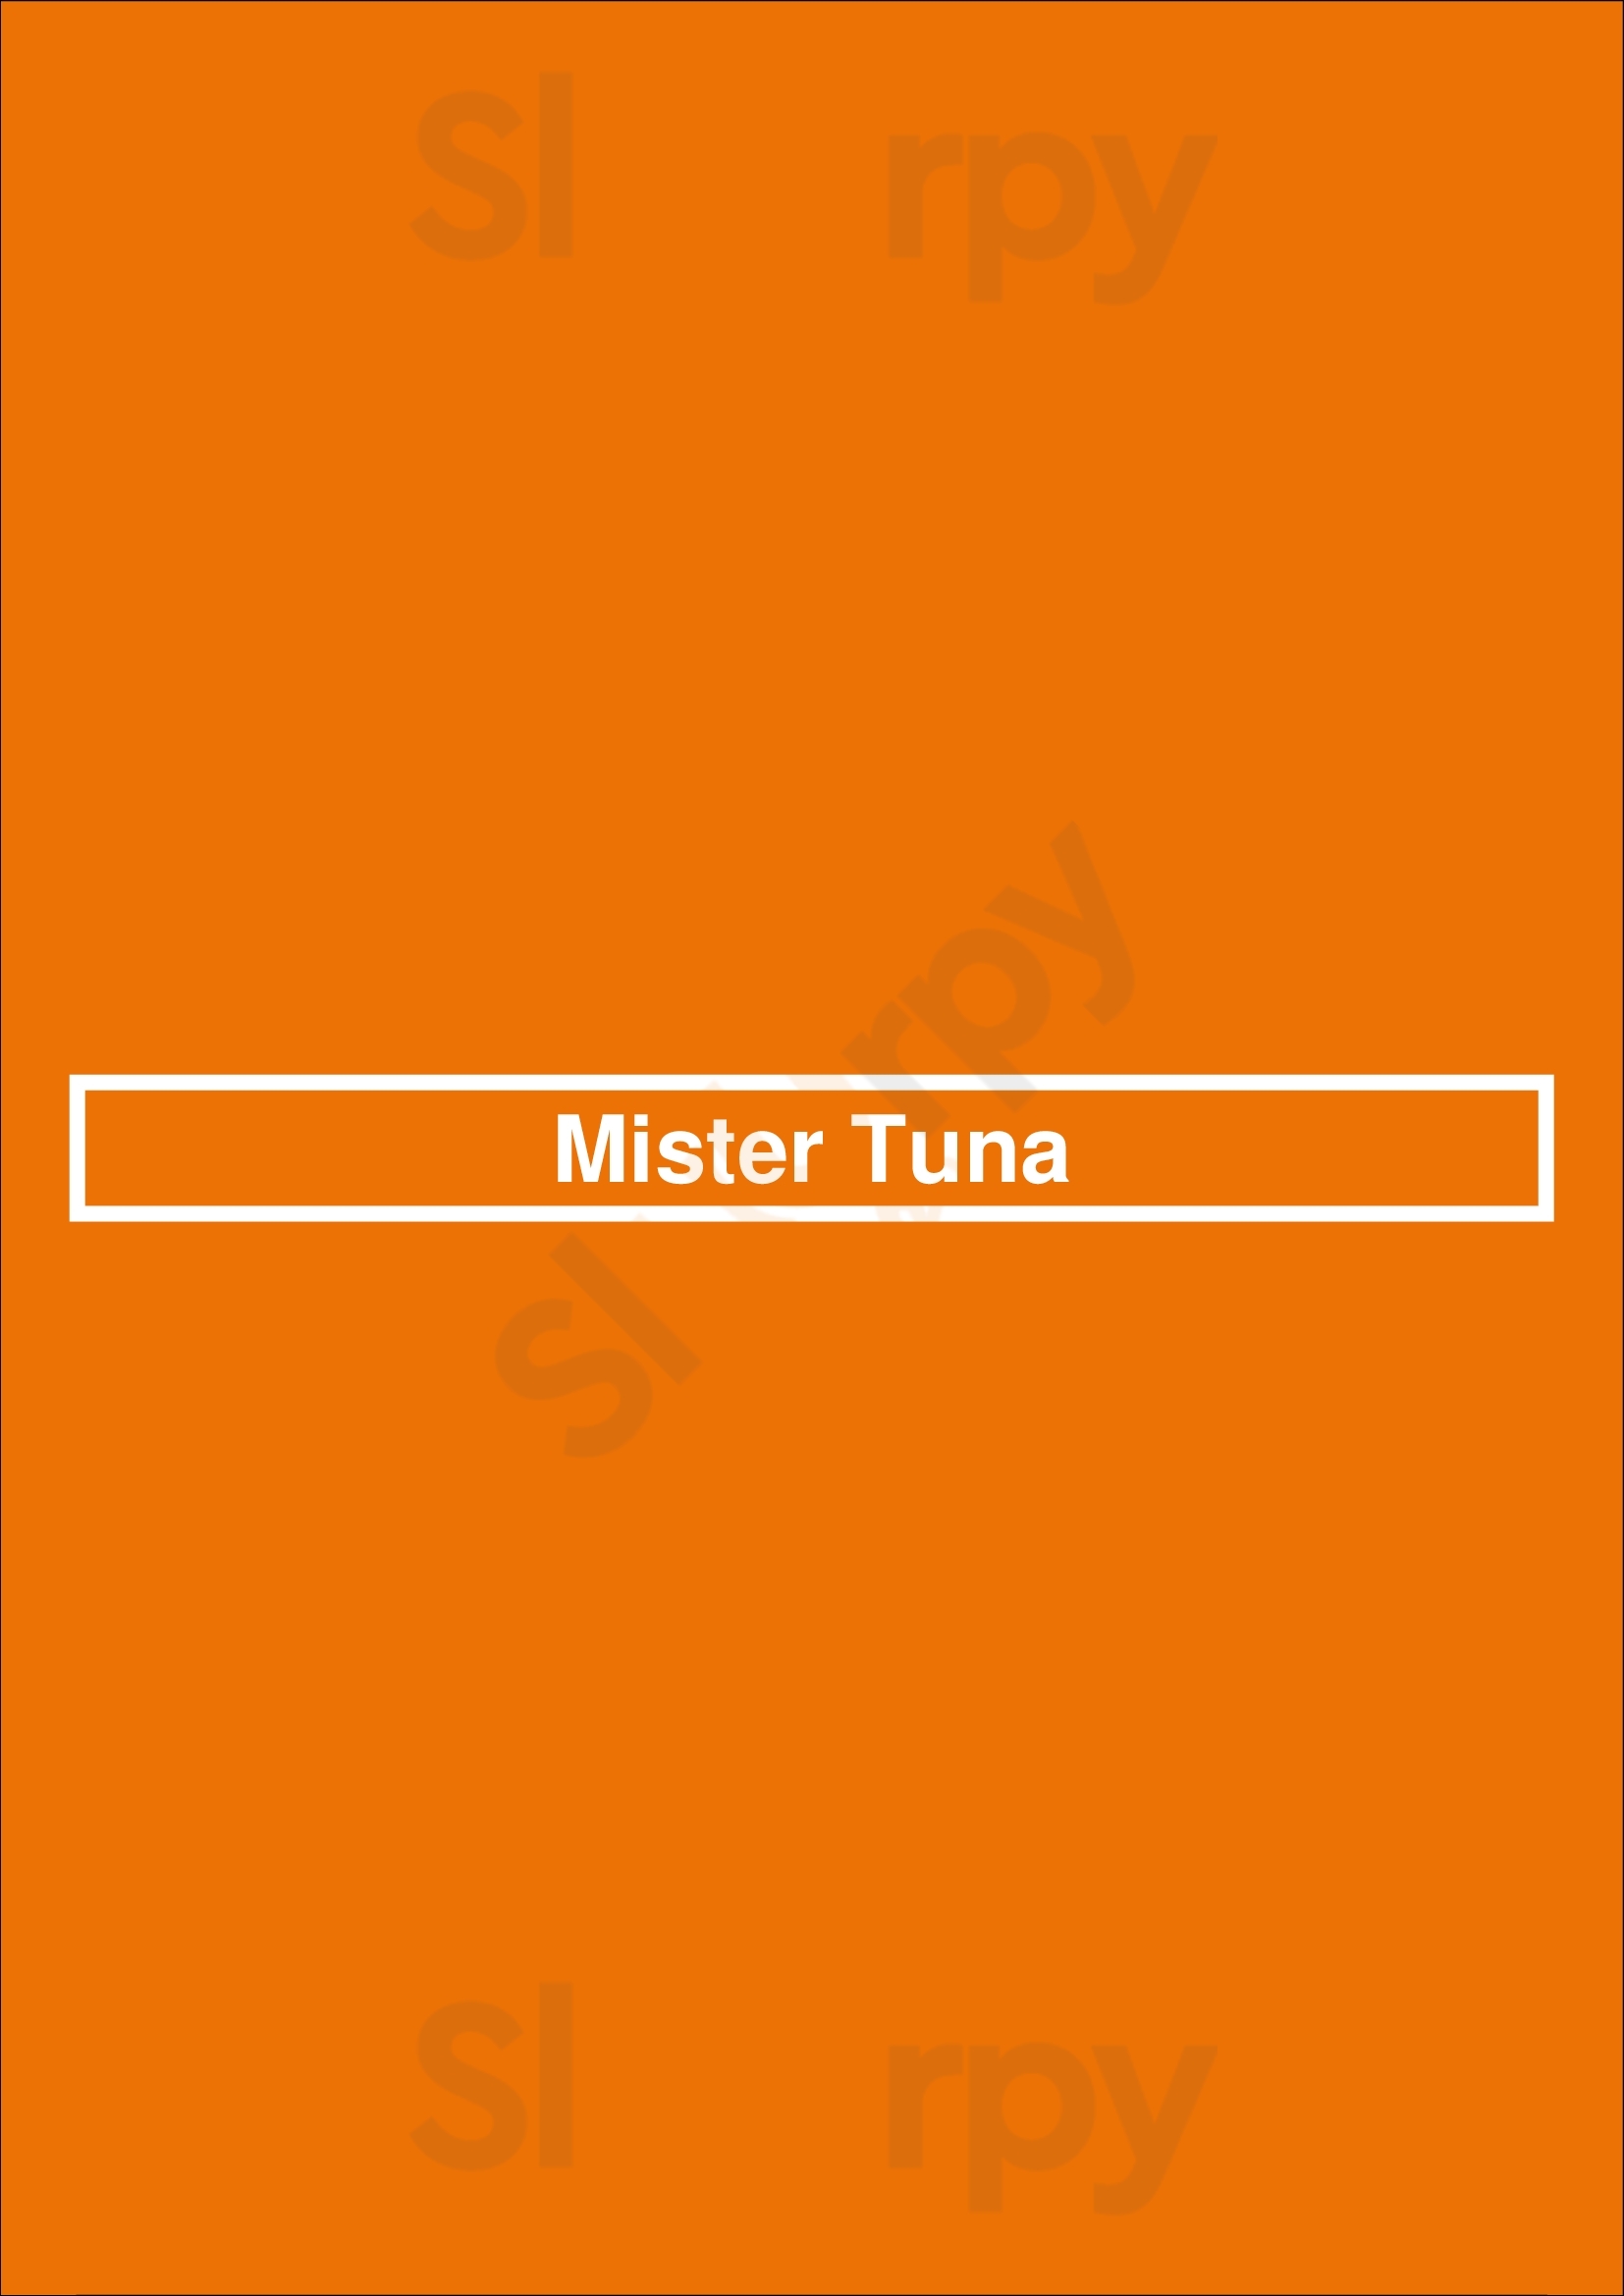 Mister Tuna Denver Menu - 1